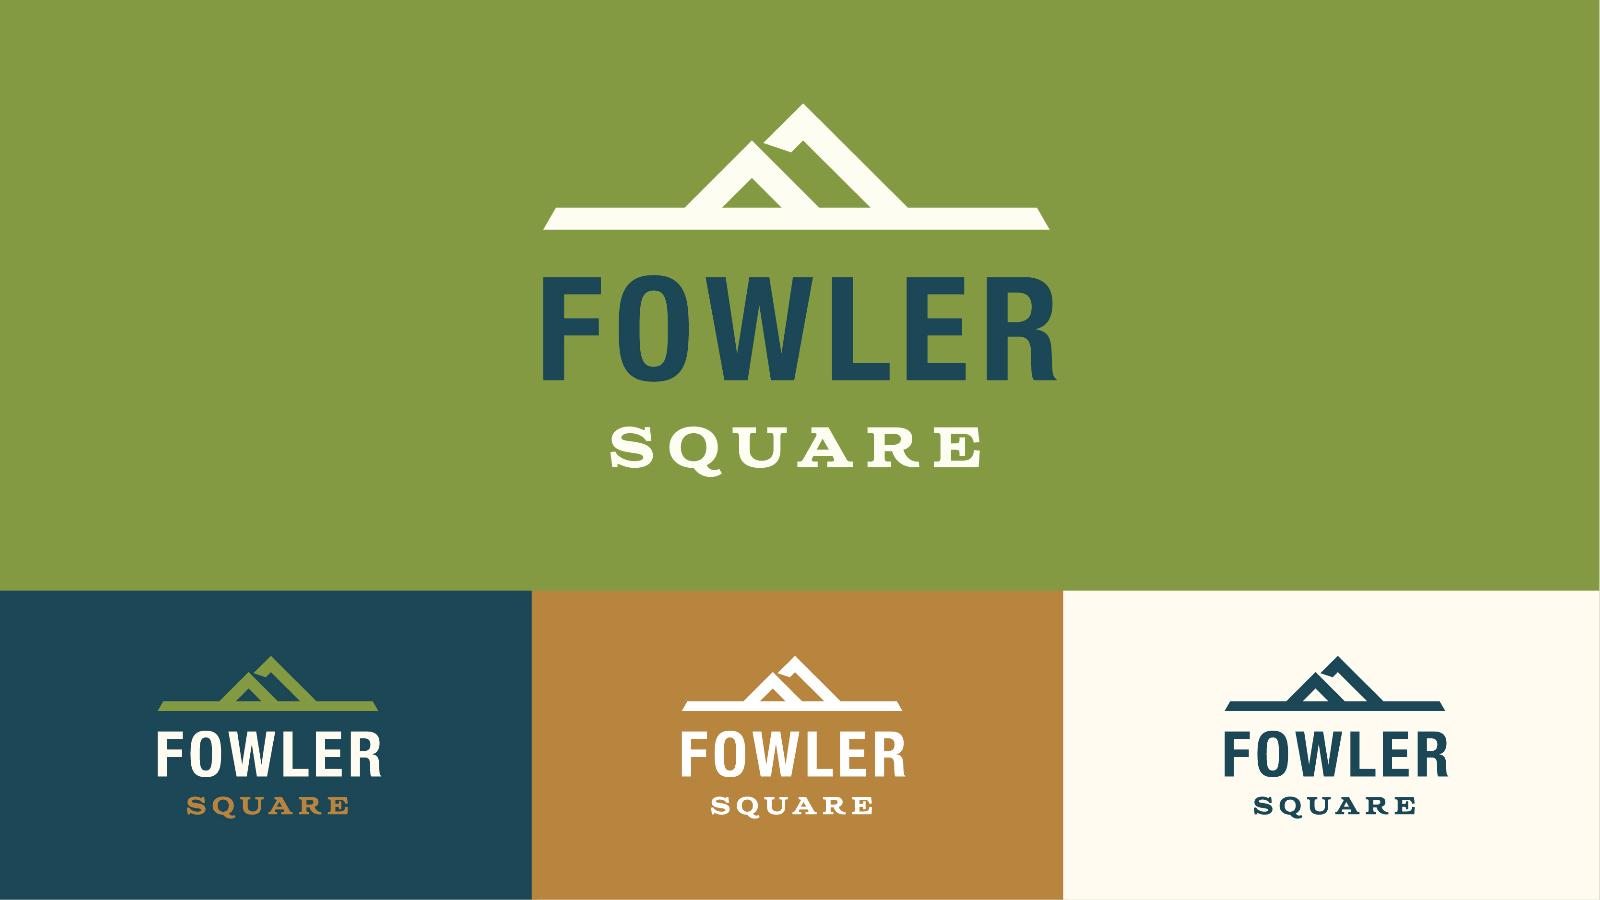 Fowler Square | Logo variations